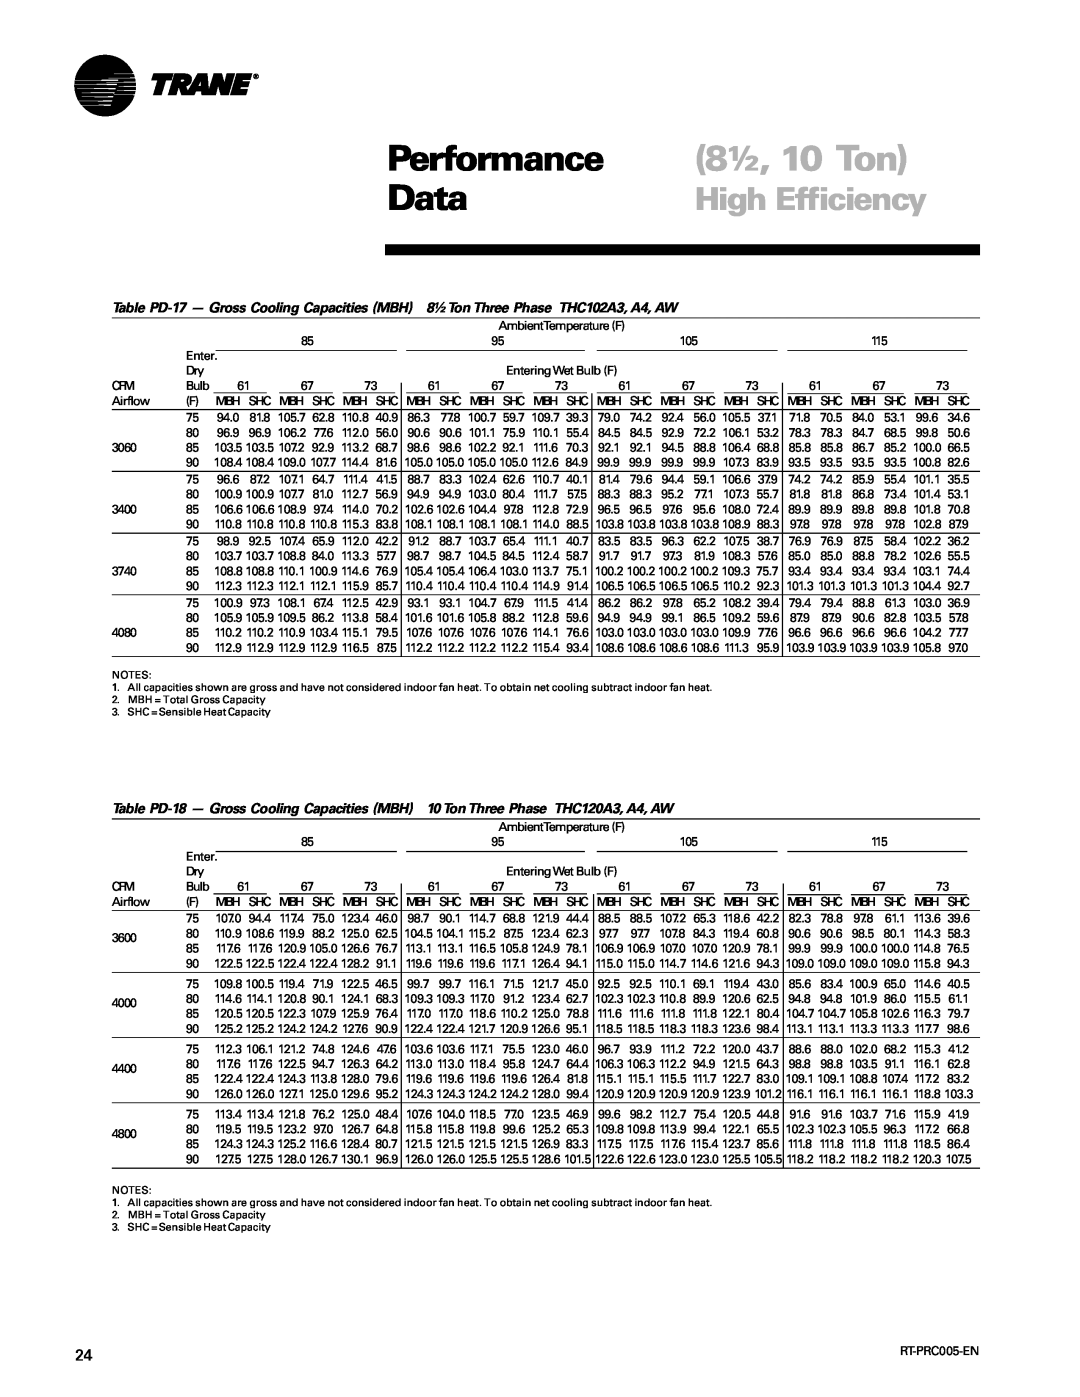 Trane RT-PRC005 manual 8½, 10 Ton, Performance, Data, High Efficiency 